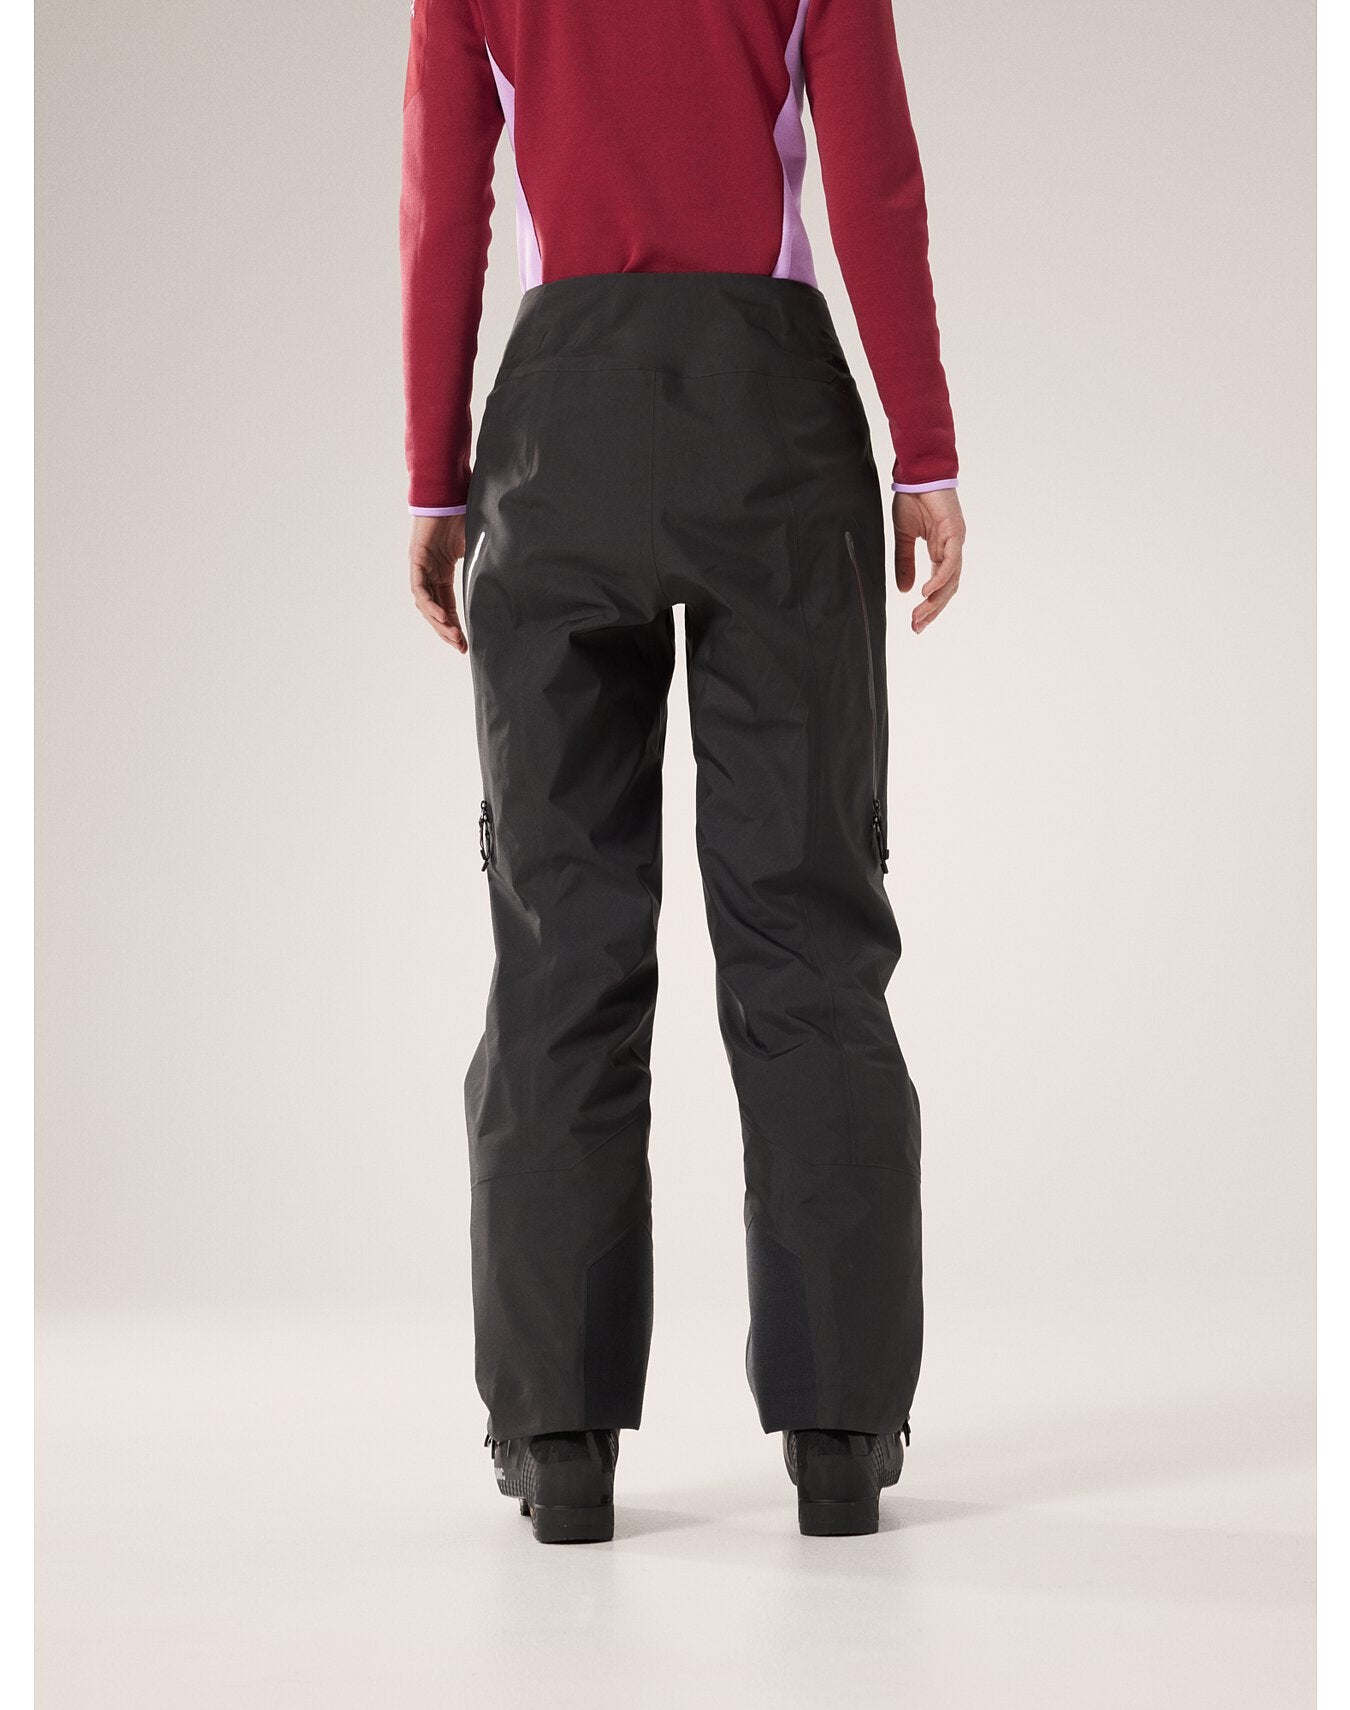 Arc'teryx Women's Nita Insulated Ski Pant